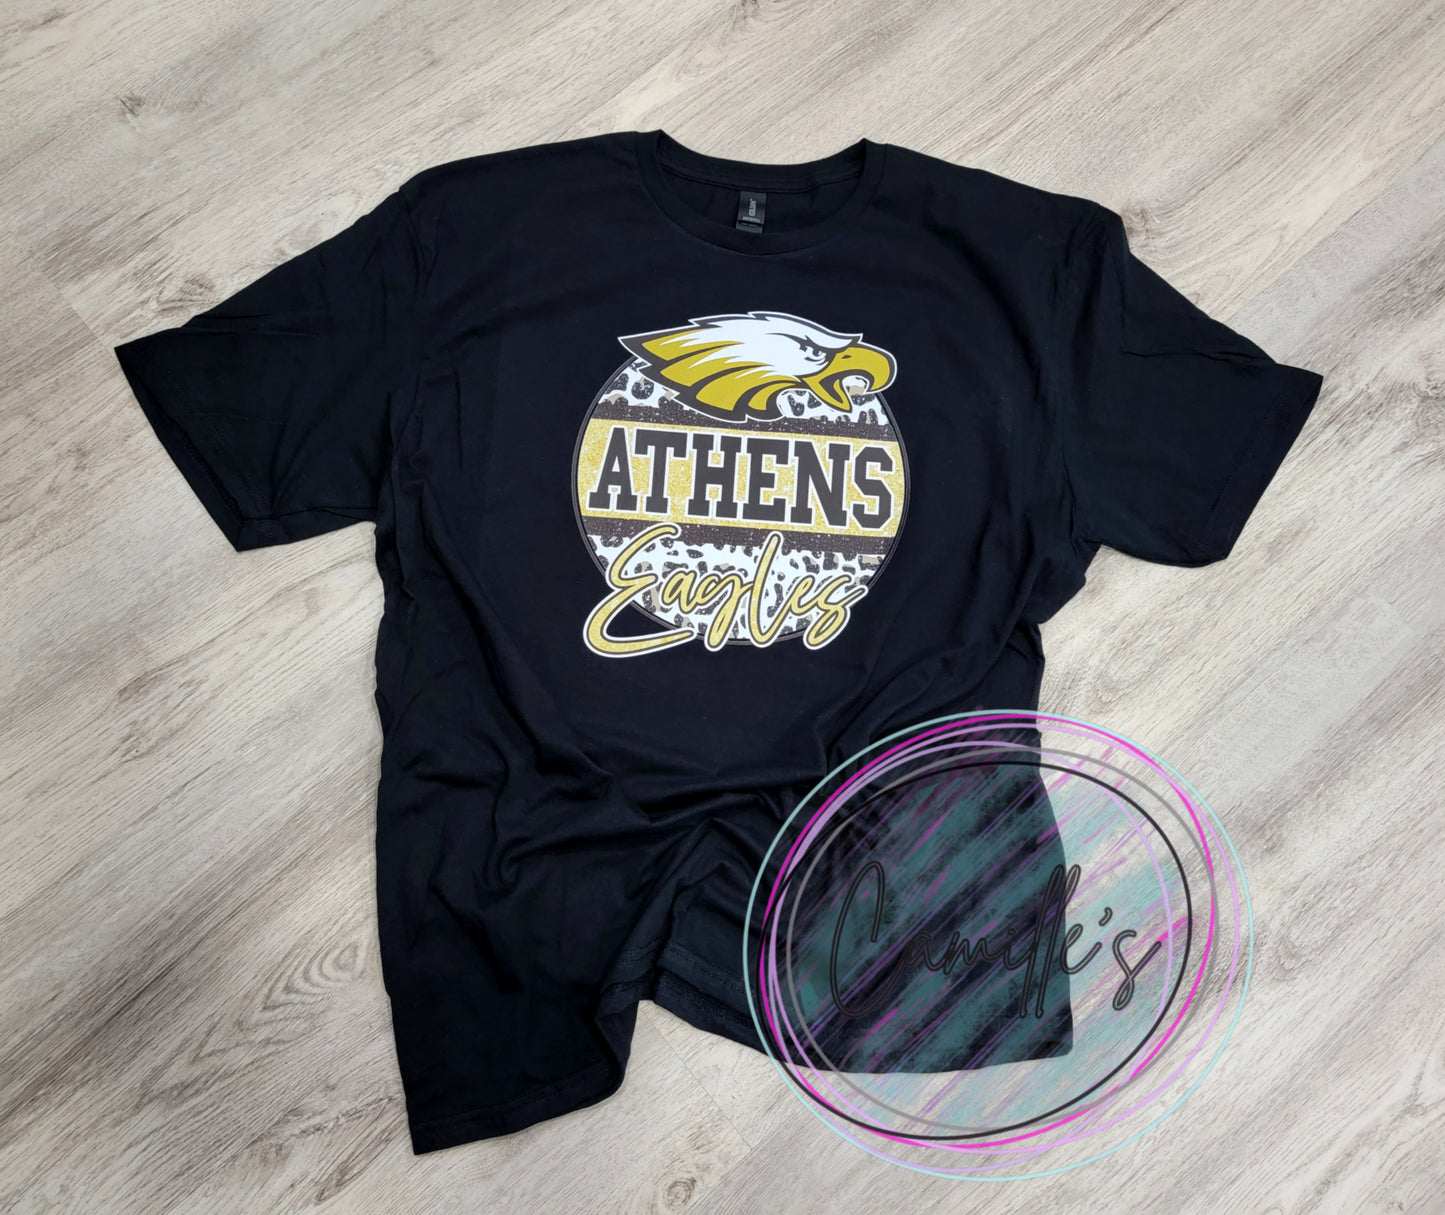 Athens Eagles